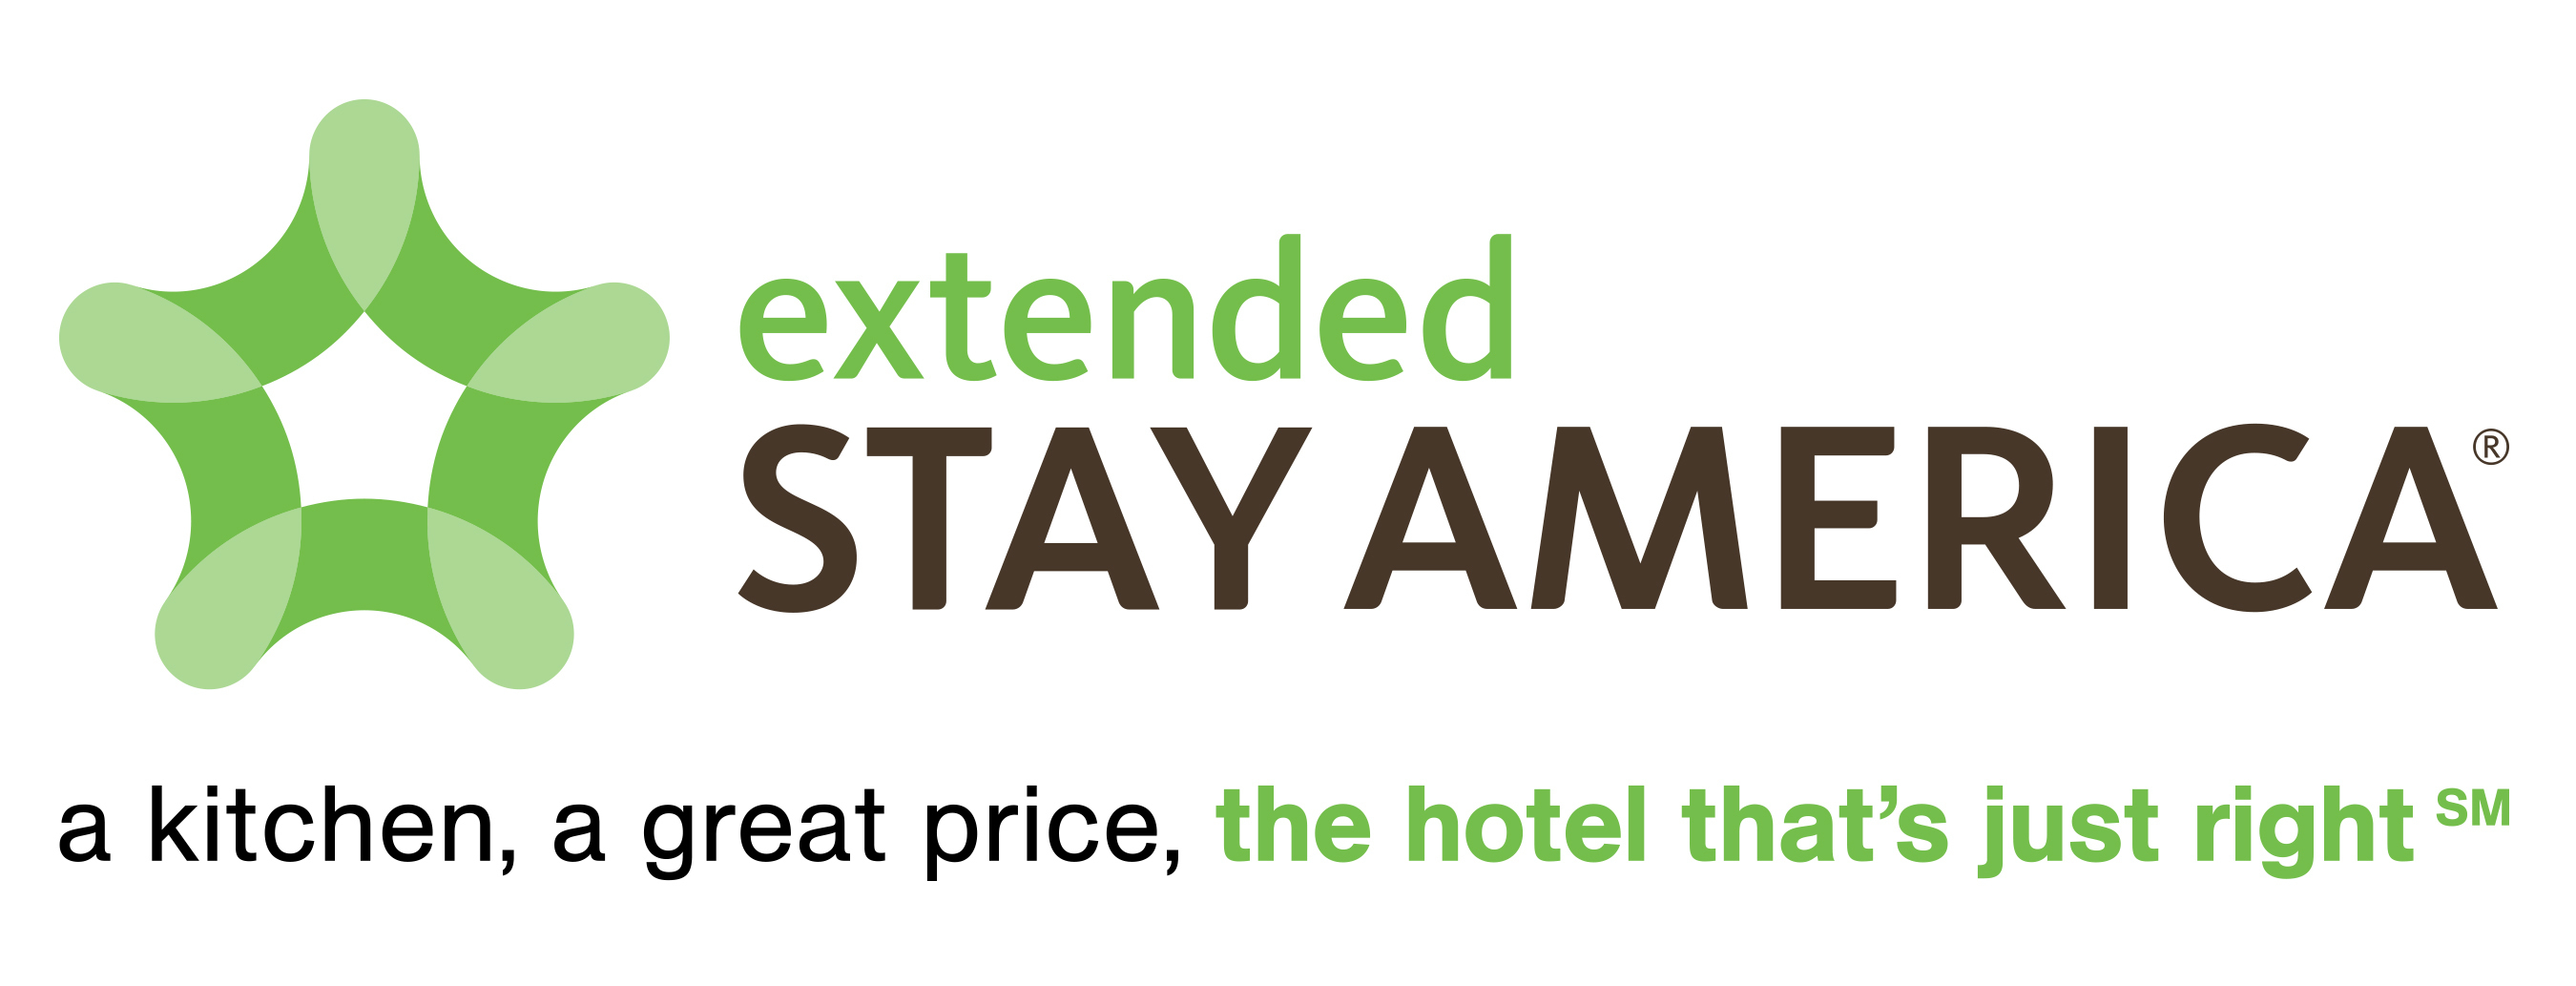 Extended Stay America Logo (PRNewsFoto/Extended Stay America)